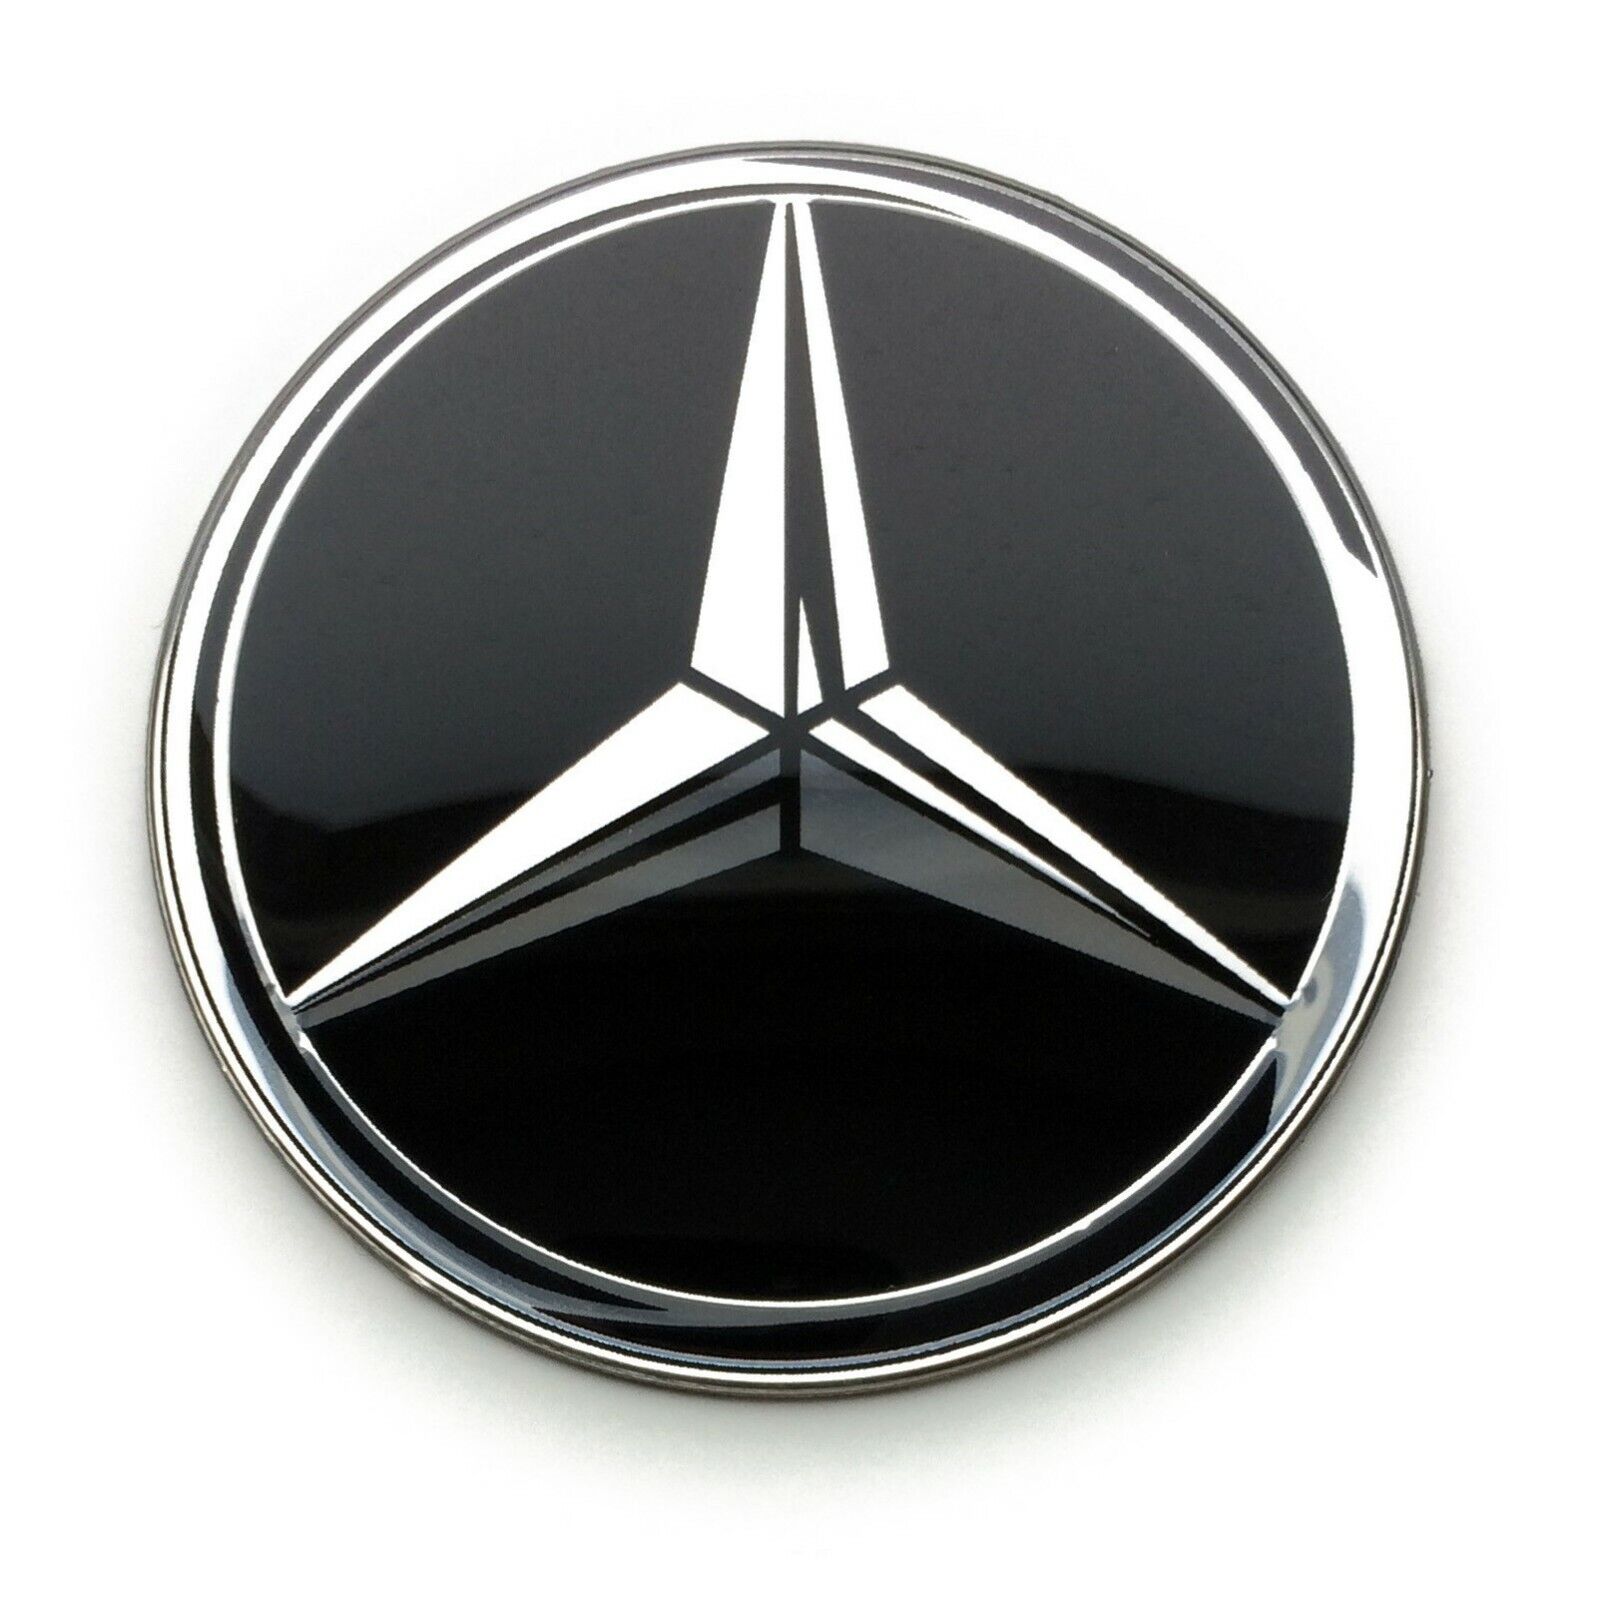 4 METAL wheel center hub cap stickers 50mm ALU emblems for Mercedes Benz rims